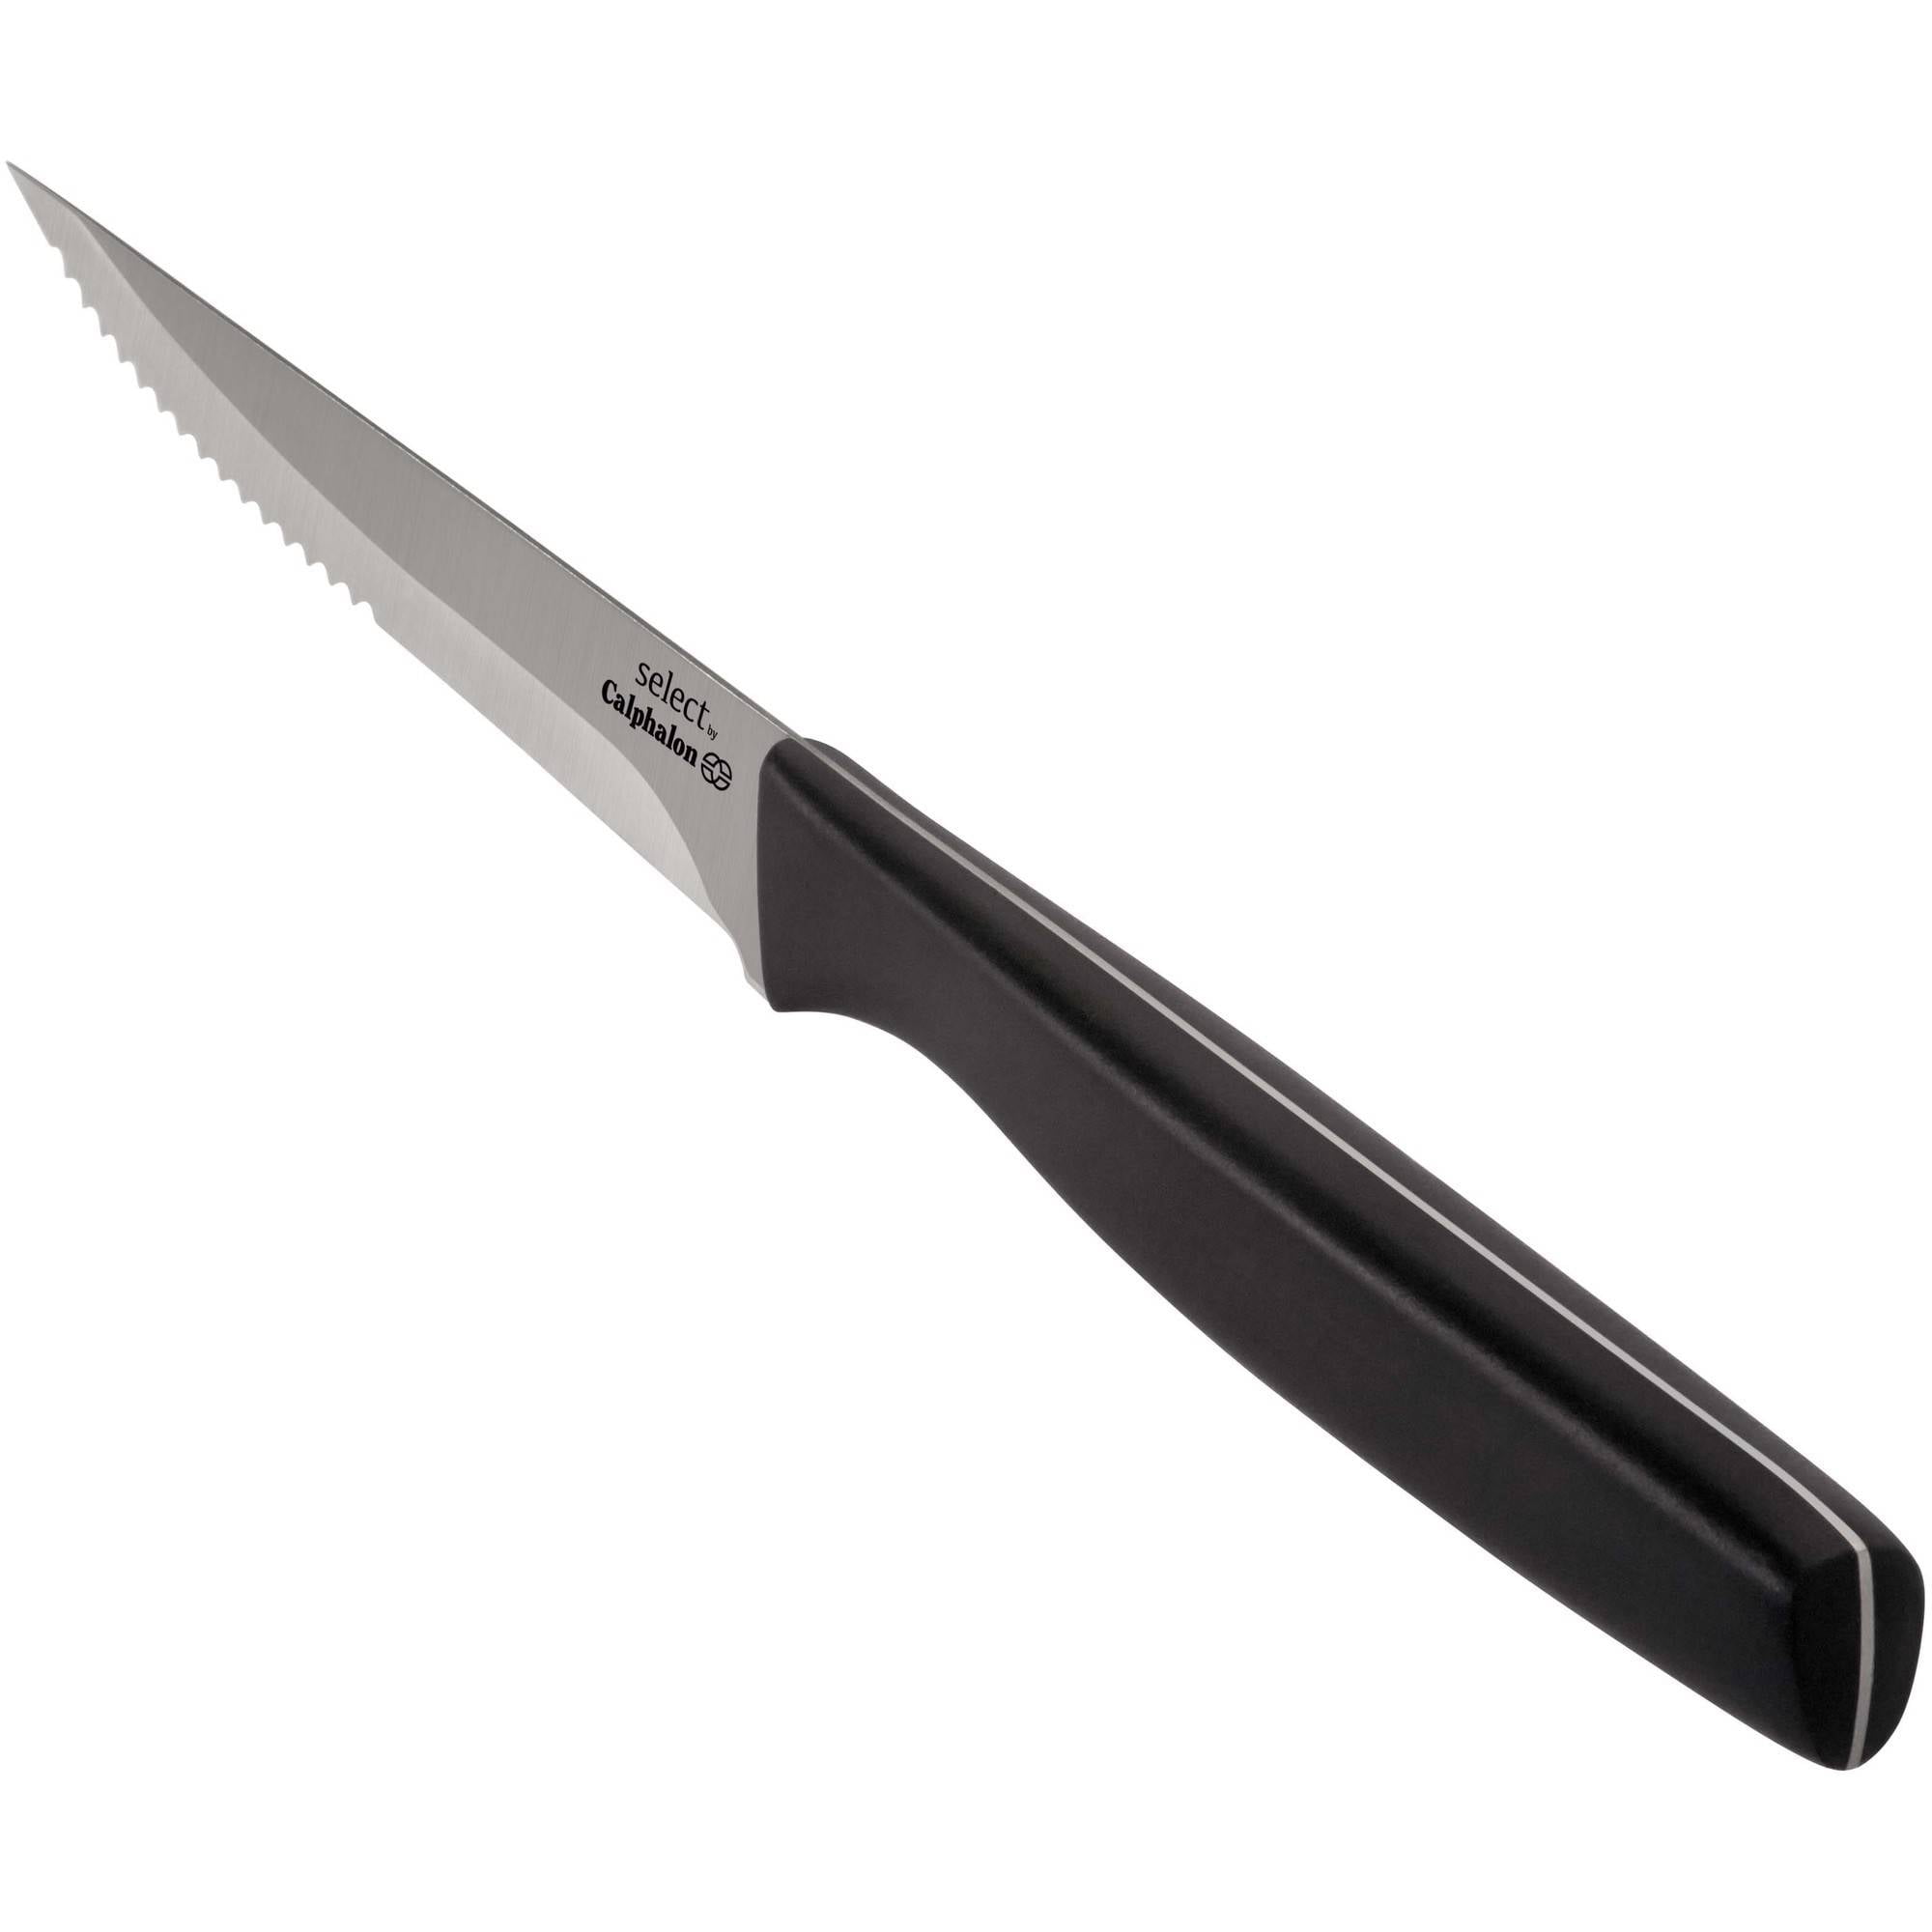 Calphalon Select Steak Knives Set Stainless Steel Blade Lot of 8